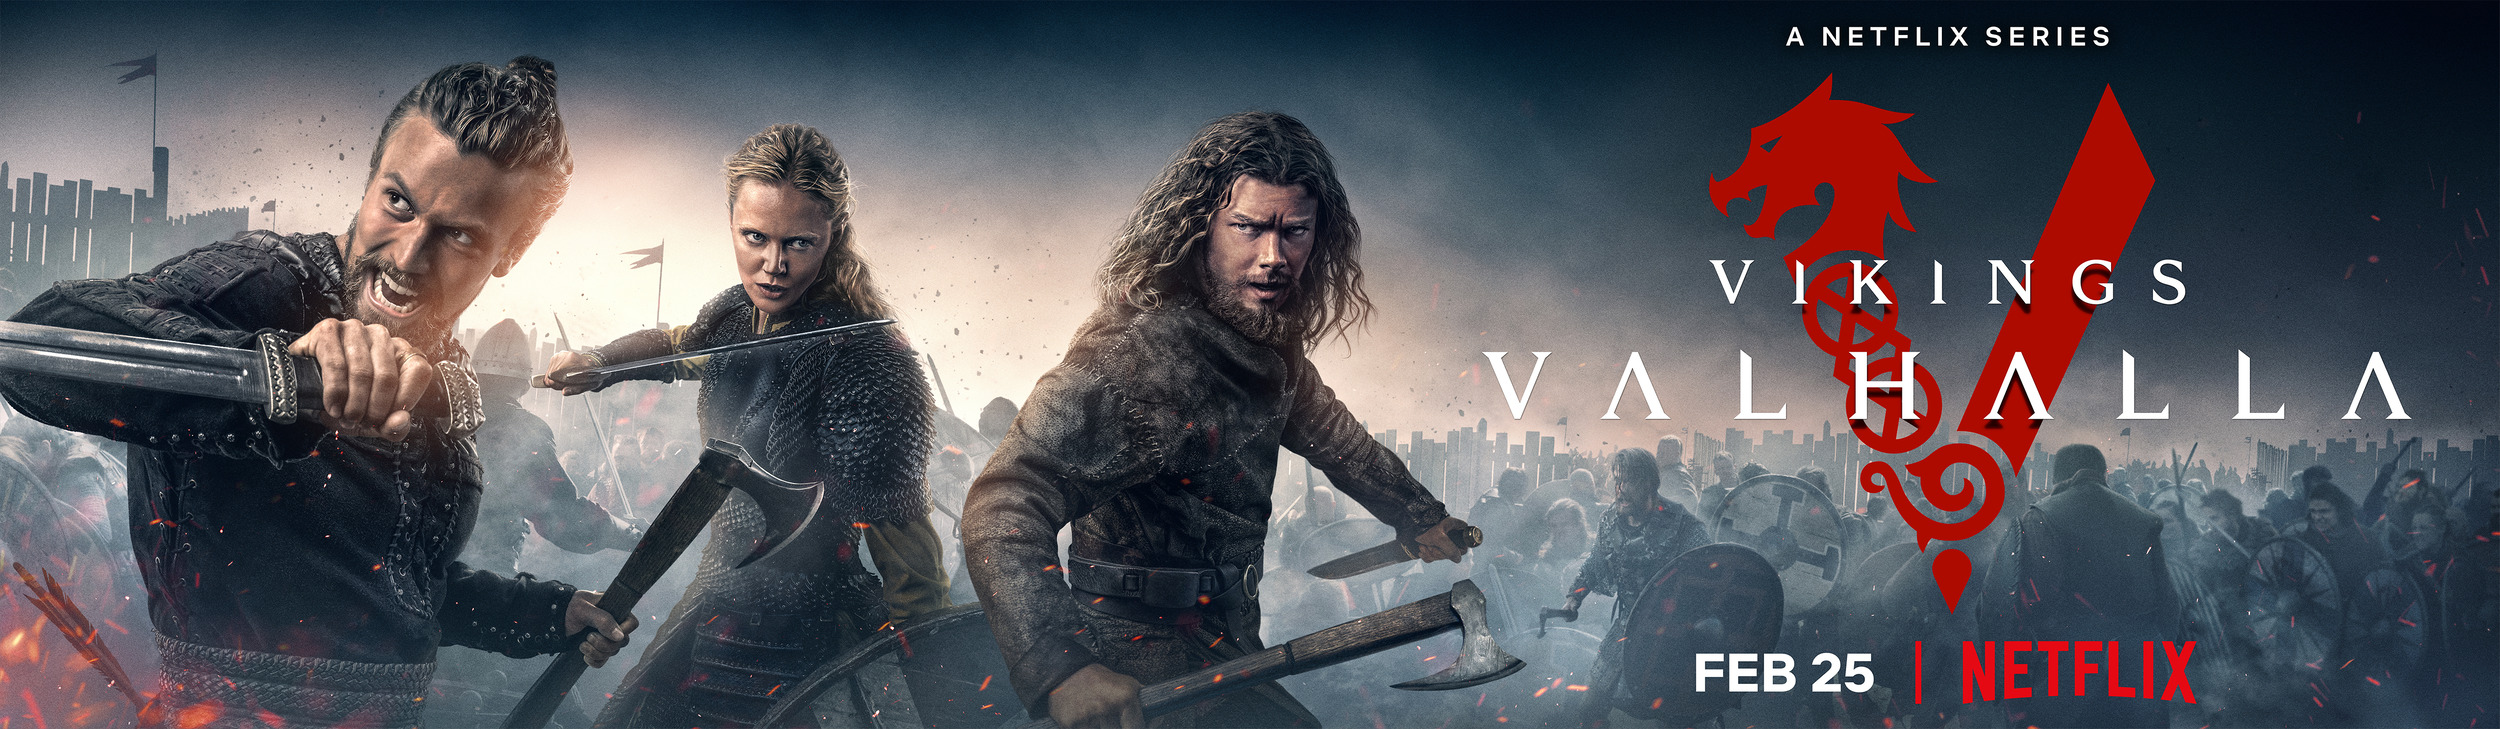 Mega Sized TV Poster Image for Vikings: Valhalla (#7 of 20)